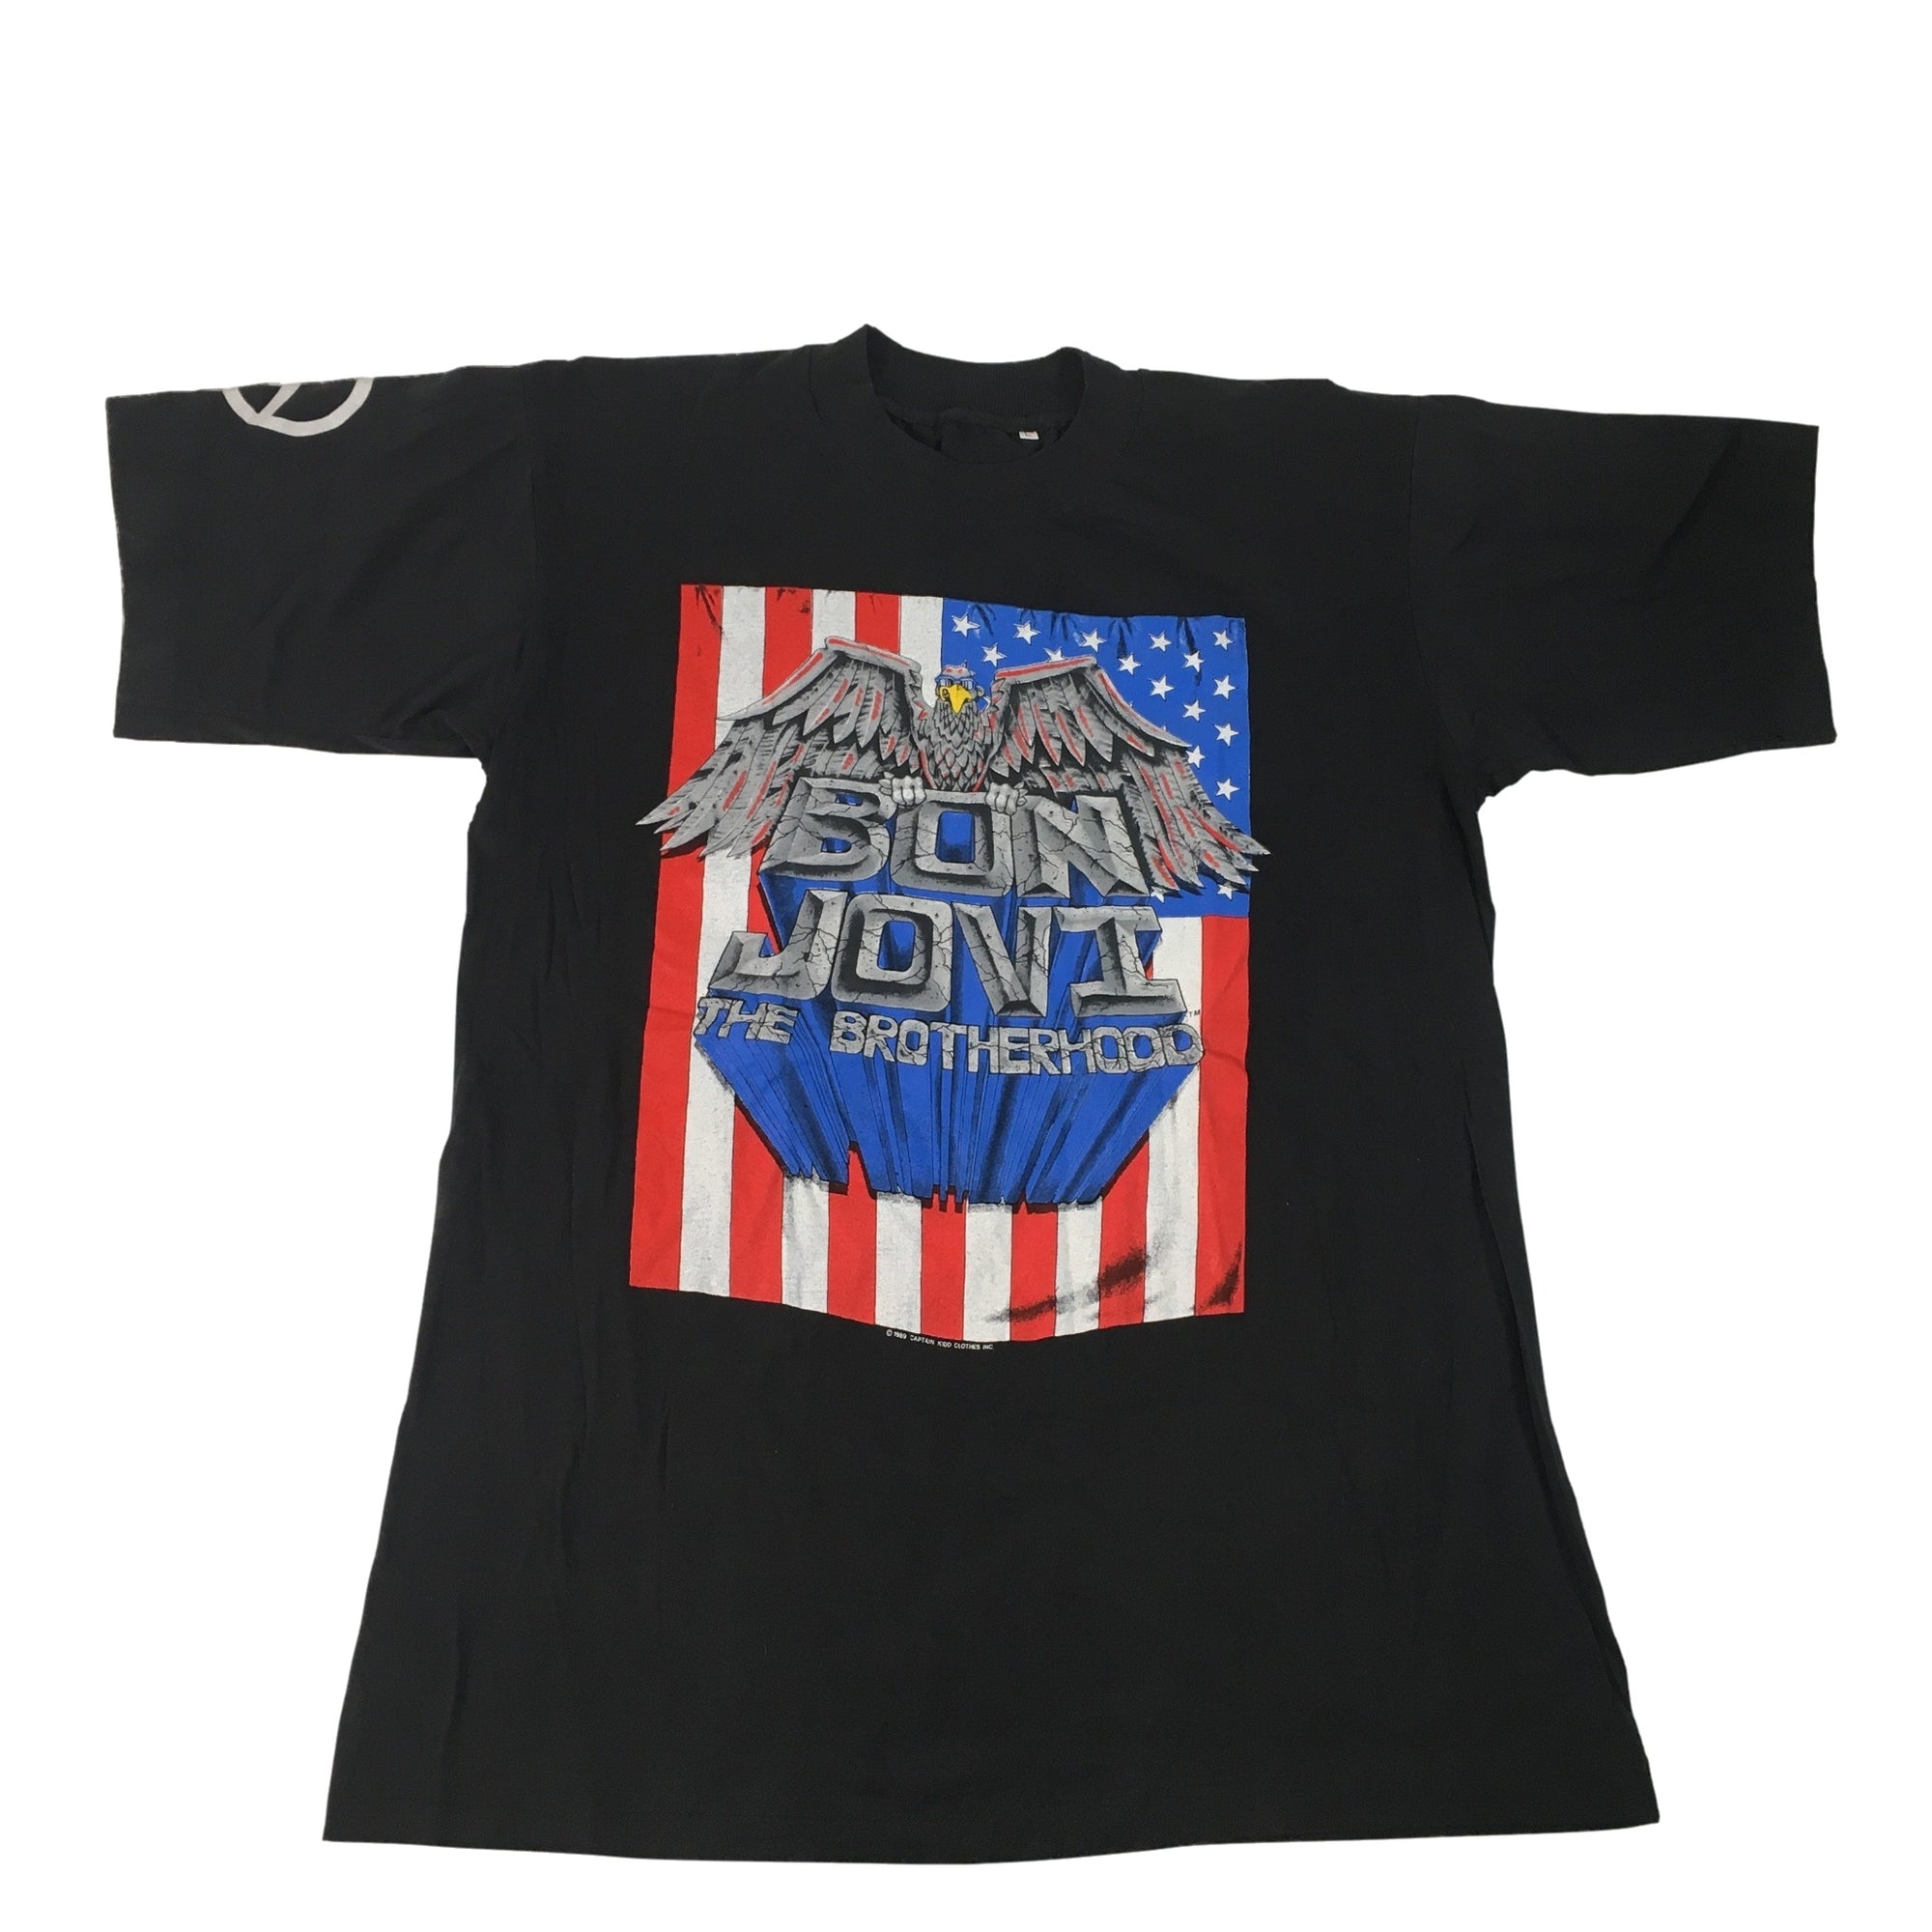 Vintage Bon Jovi "The Brotherhood" T-Shirt - jointcustodydc